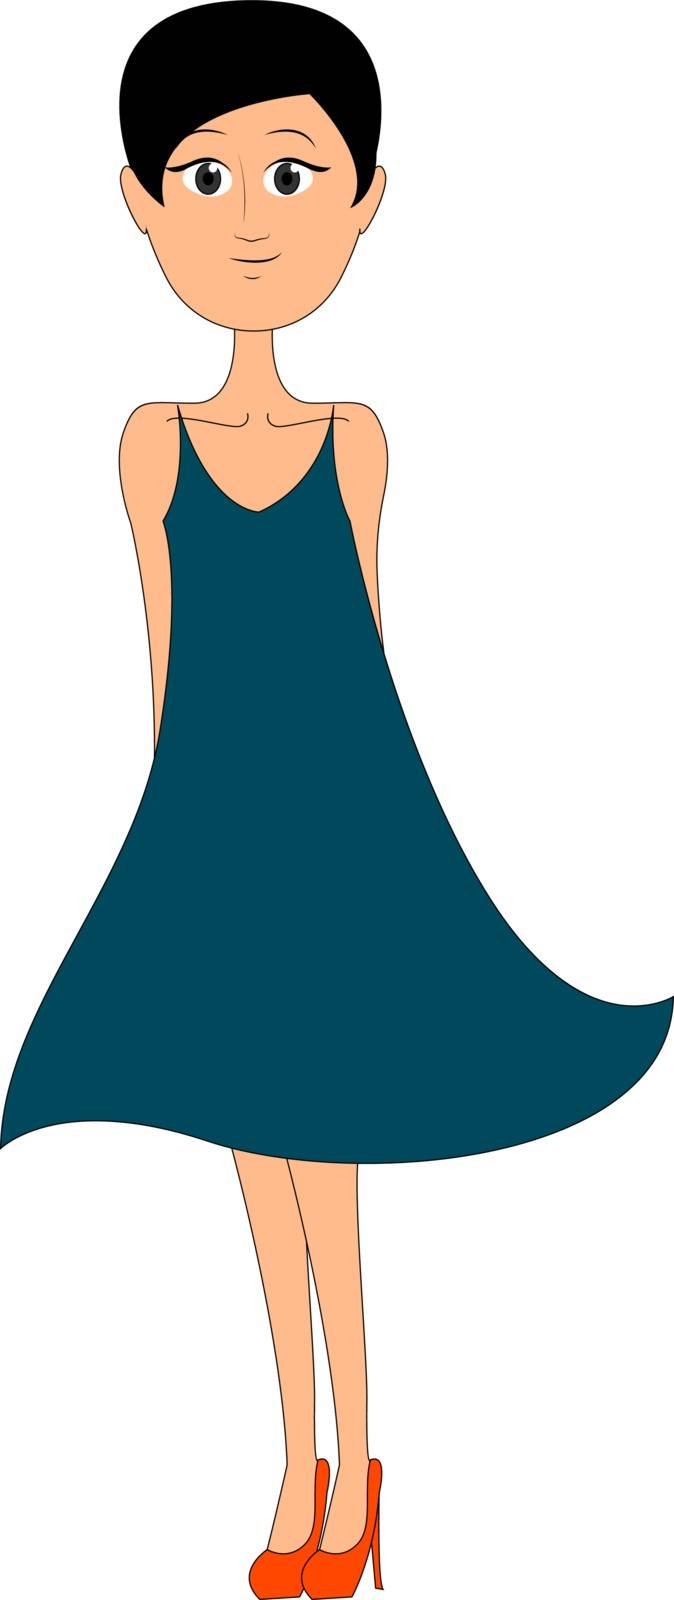 Girl in high heels, illustration, vector on white background.